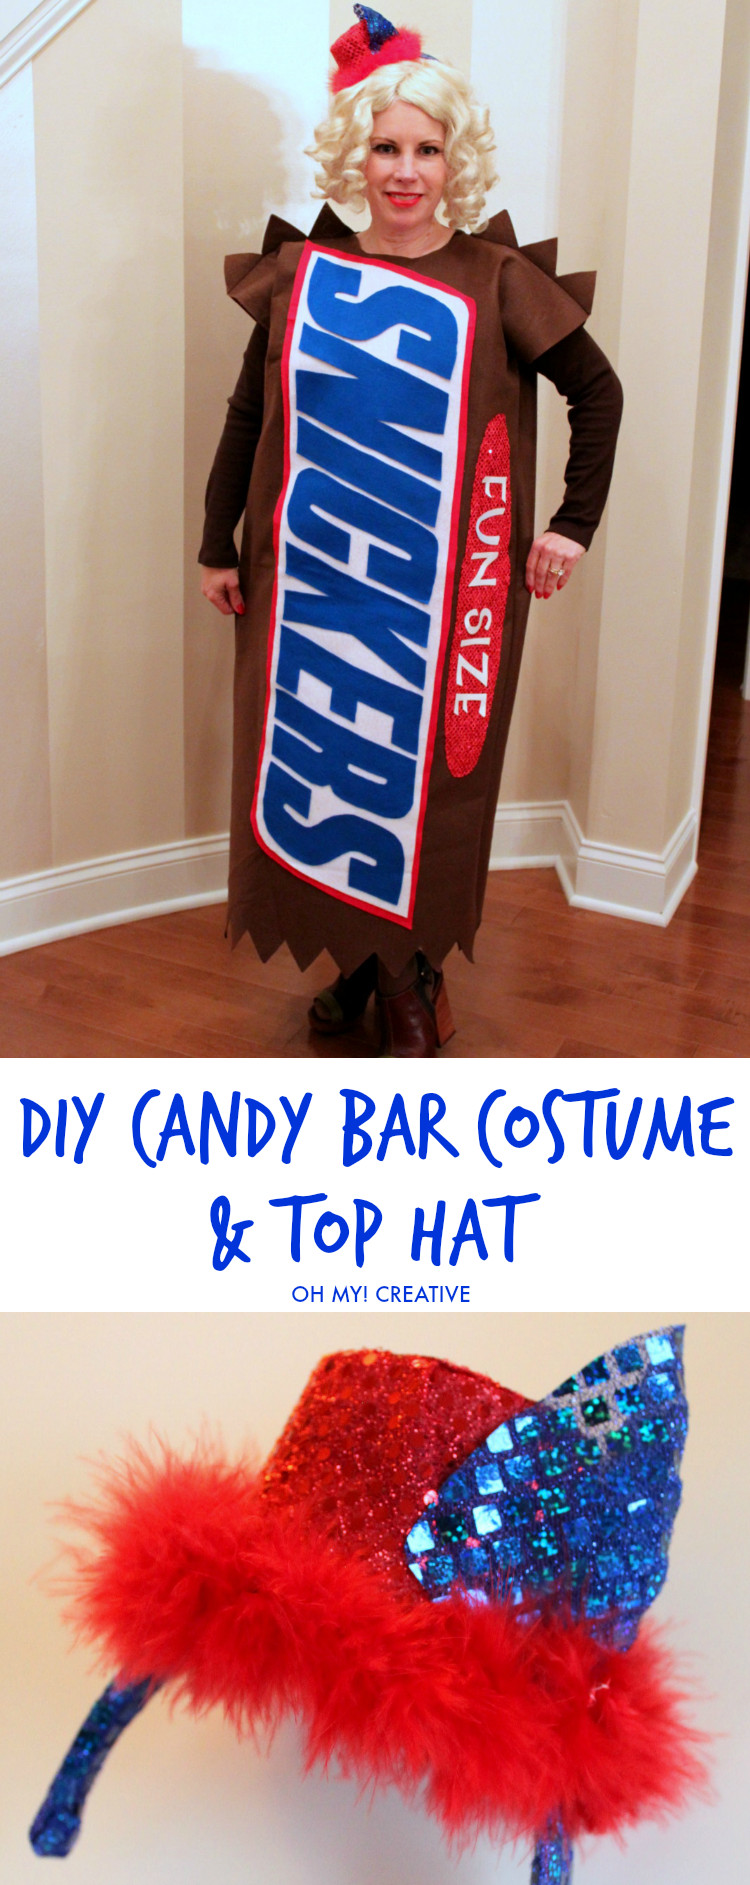 Creative DIY Costumes
 DIY Candy Bar Halloween Costumes Oh My Creative